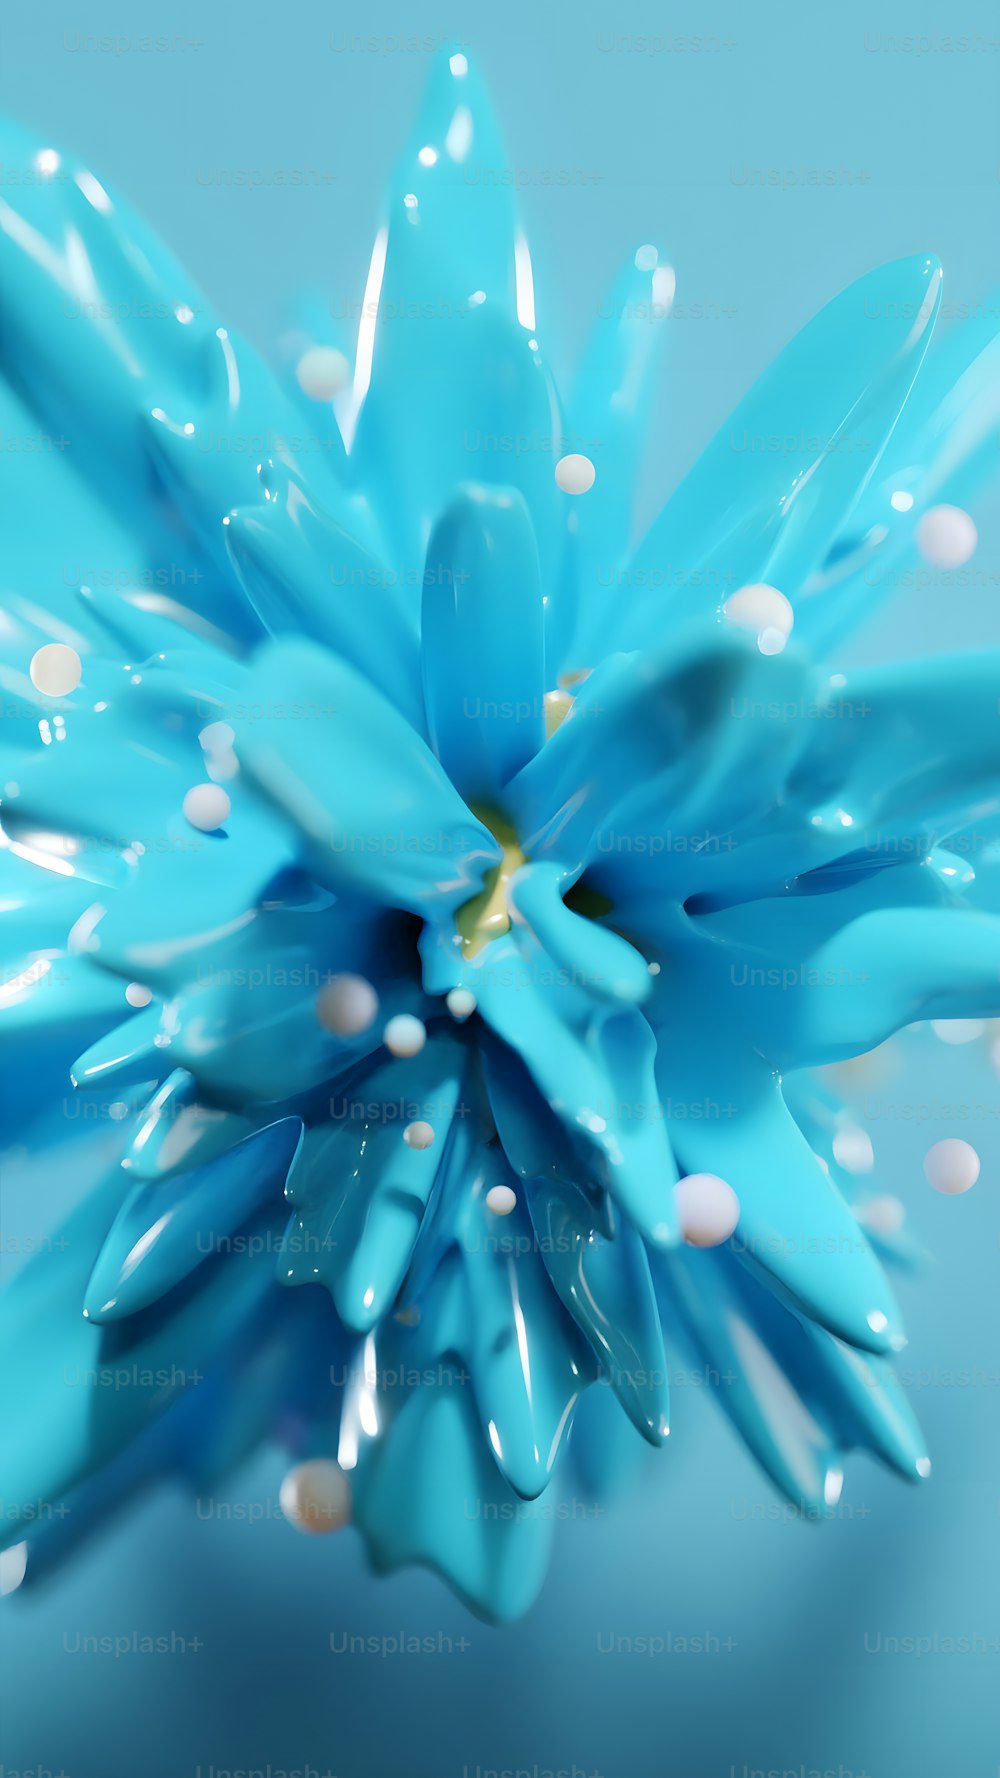 Un primer plano de una flor azul sobre un fondo azul